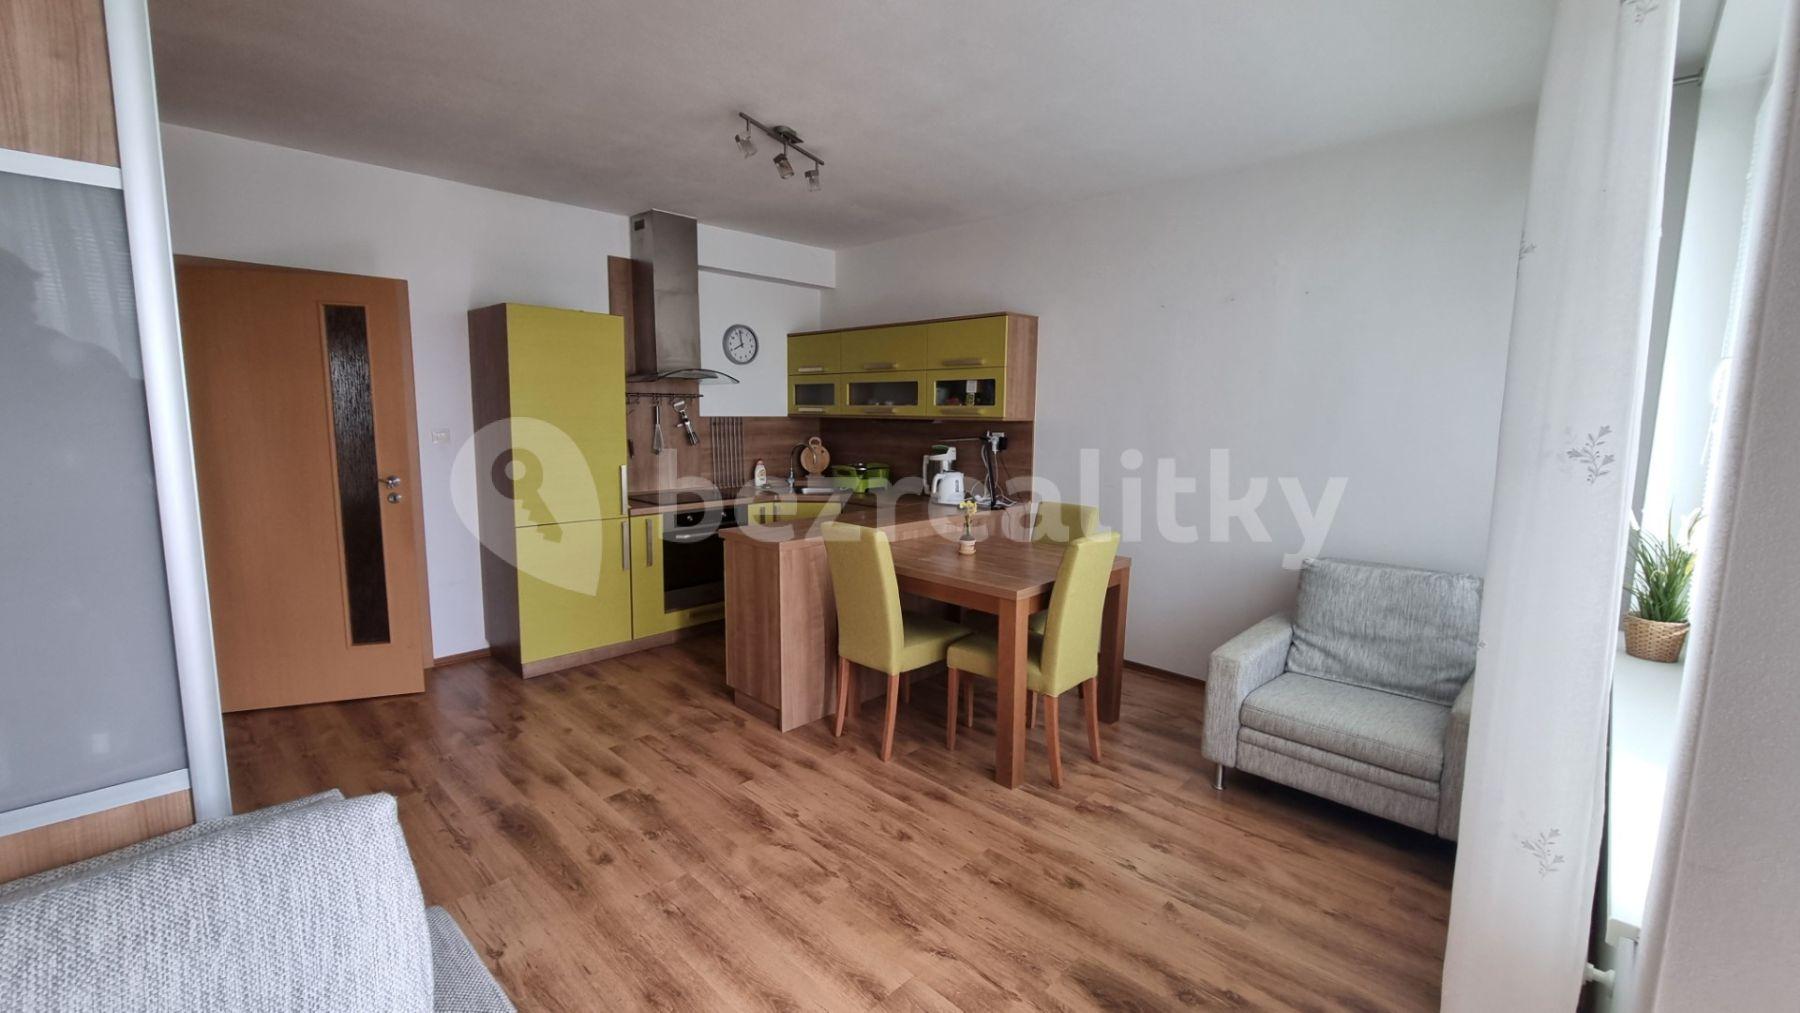 1 bedroom flat to rent, 42 m², Jégého, Ružinov, Bratislavský Region